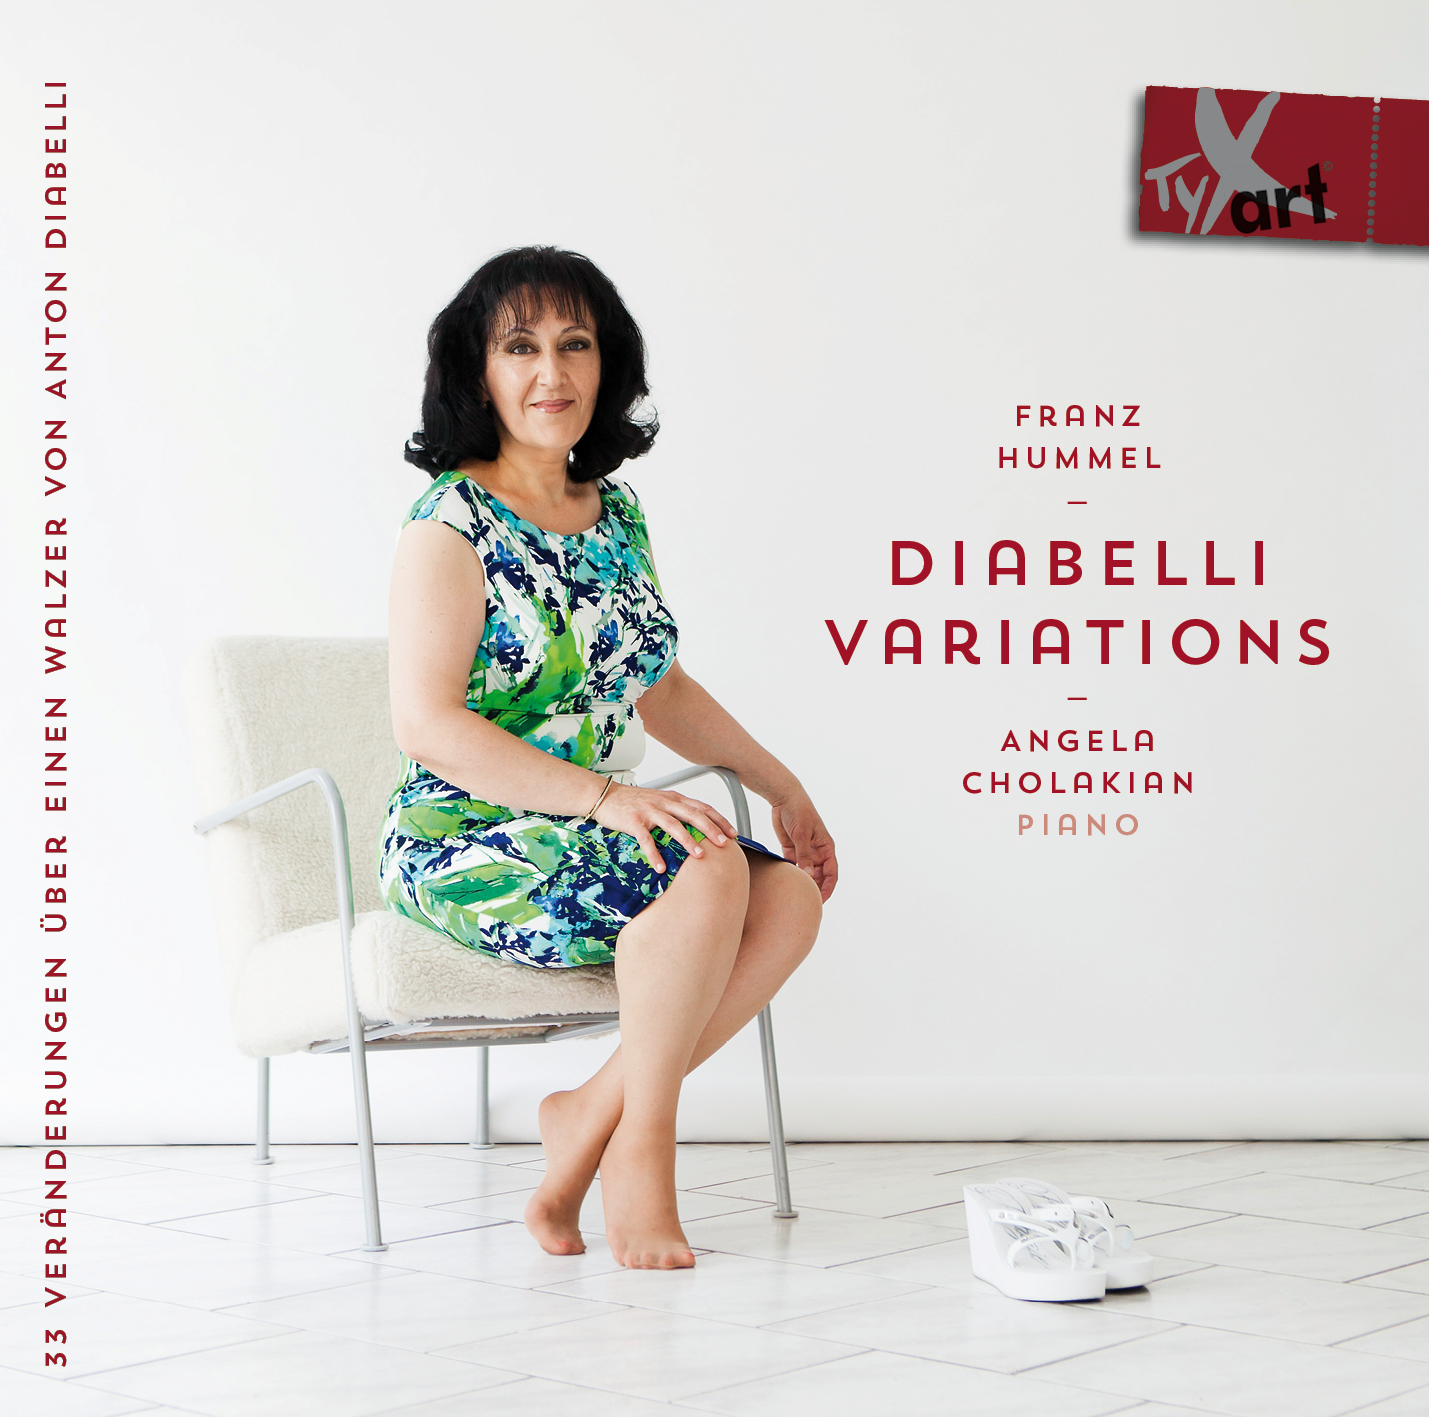 Angela Cholakian, Klavier: Hummel Diabelli-Variationen